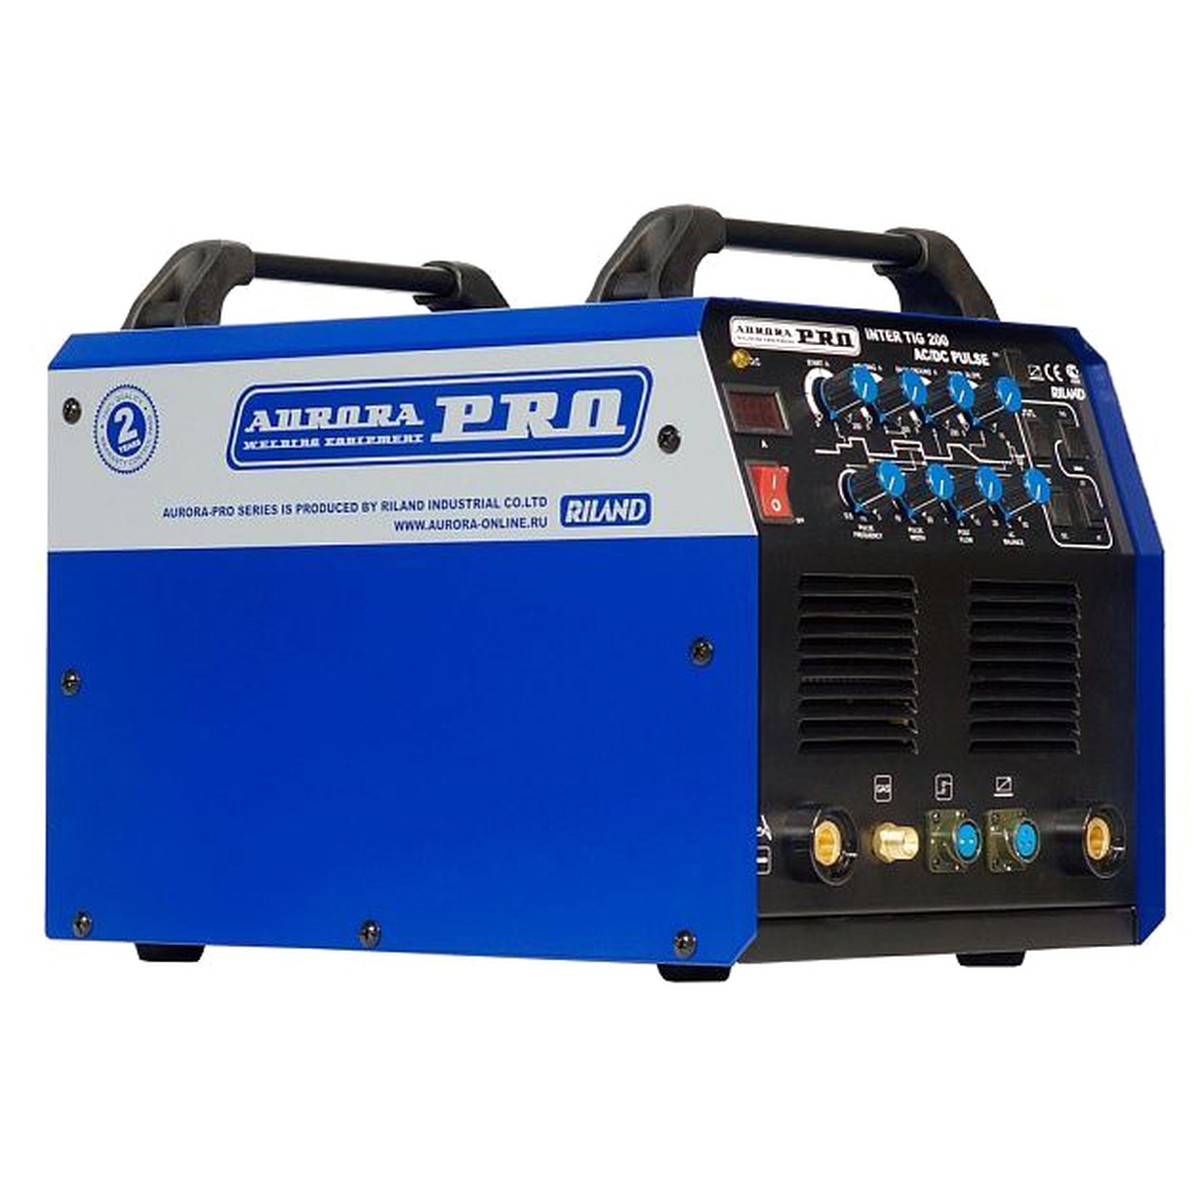 Pro inter tig 200. Aurora Pro Inter Tig 200 AC/DC Pulse. Aurora Pro Tig 200 AC/DC Pulse. Aurora Inter Tig 200 AC/DC.